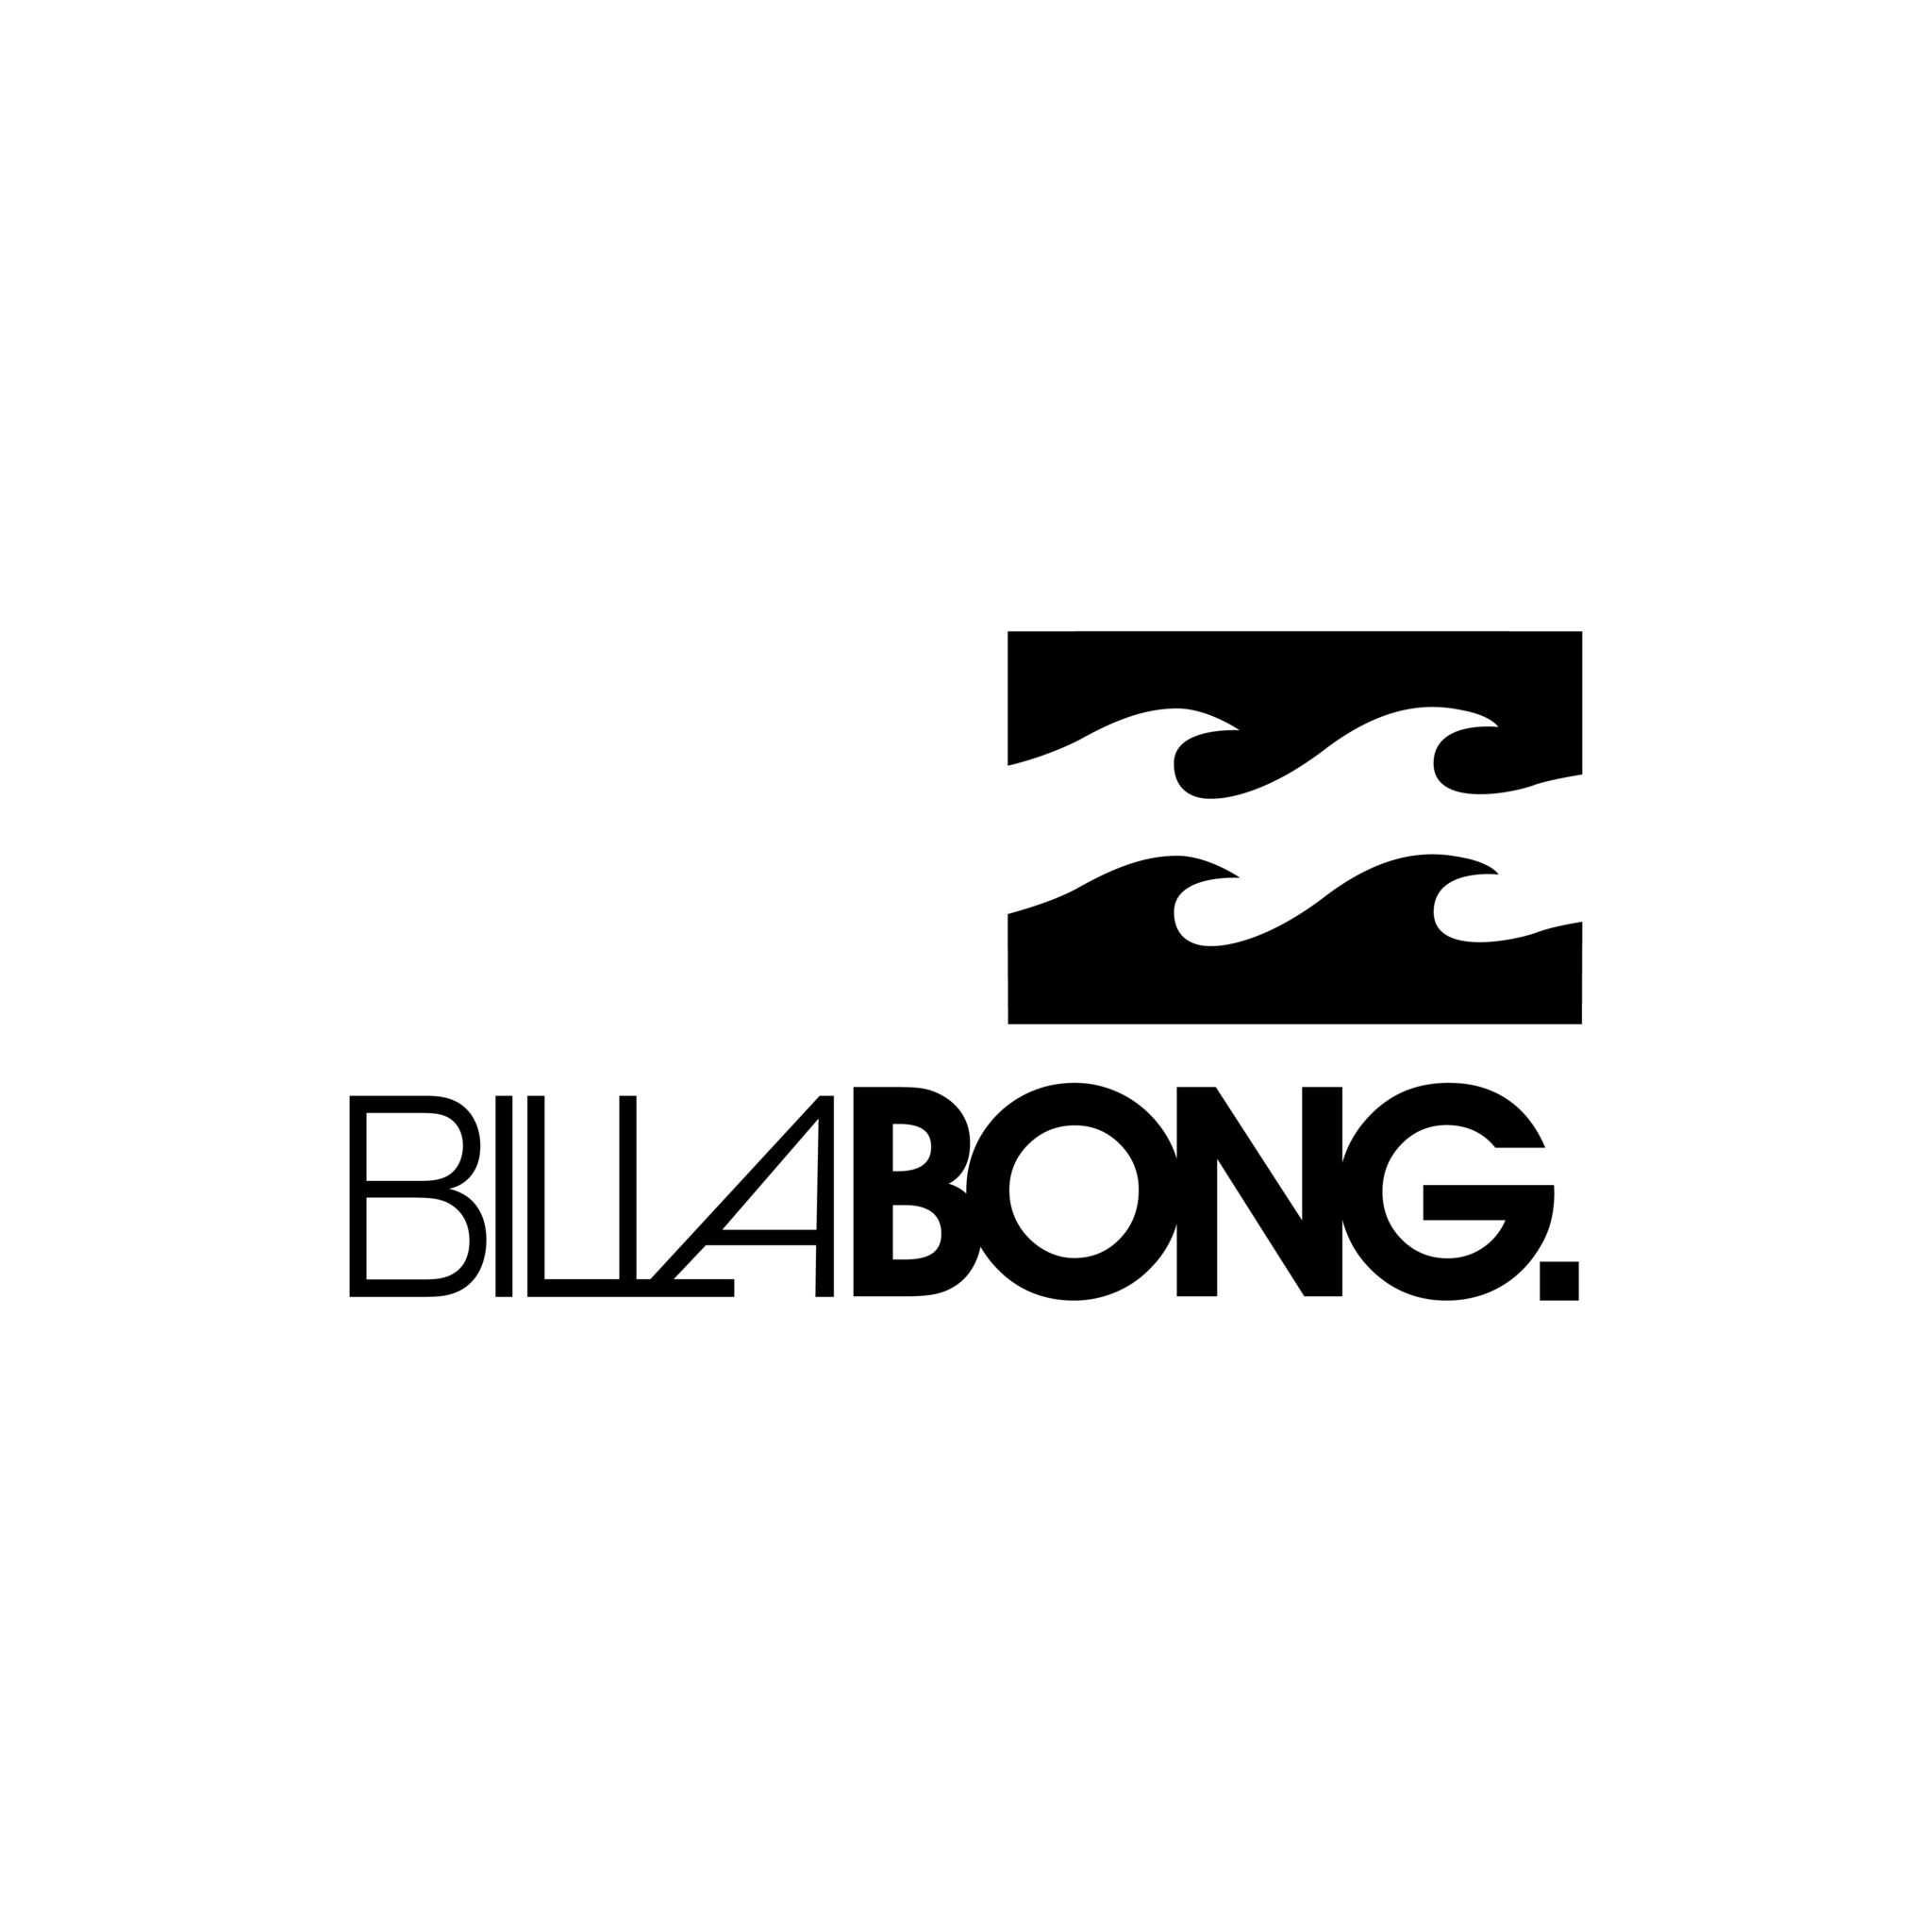 Billabong Logo and symbol, meaning, history, PNG, brand